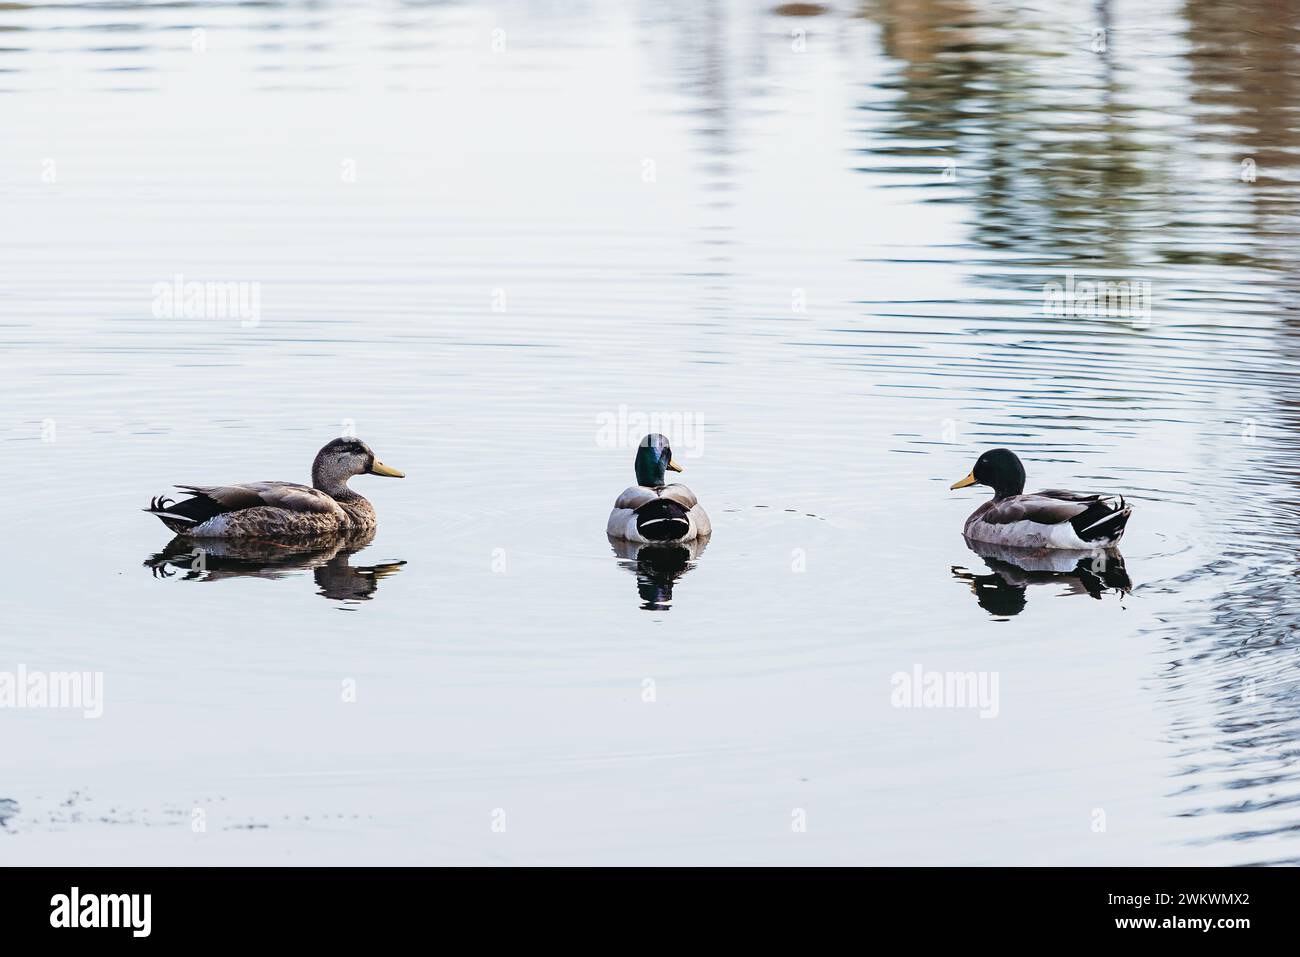 Group of three Mallard ducks swimming on a lake Stock Photo